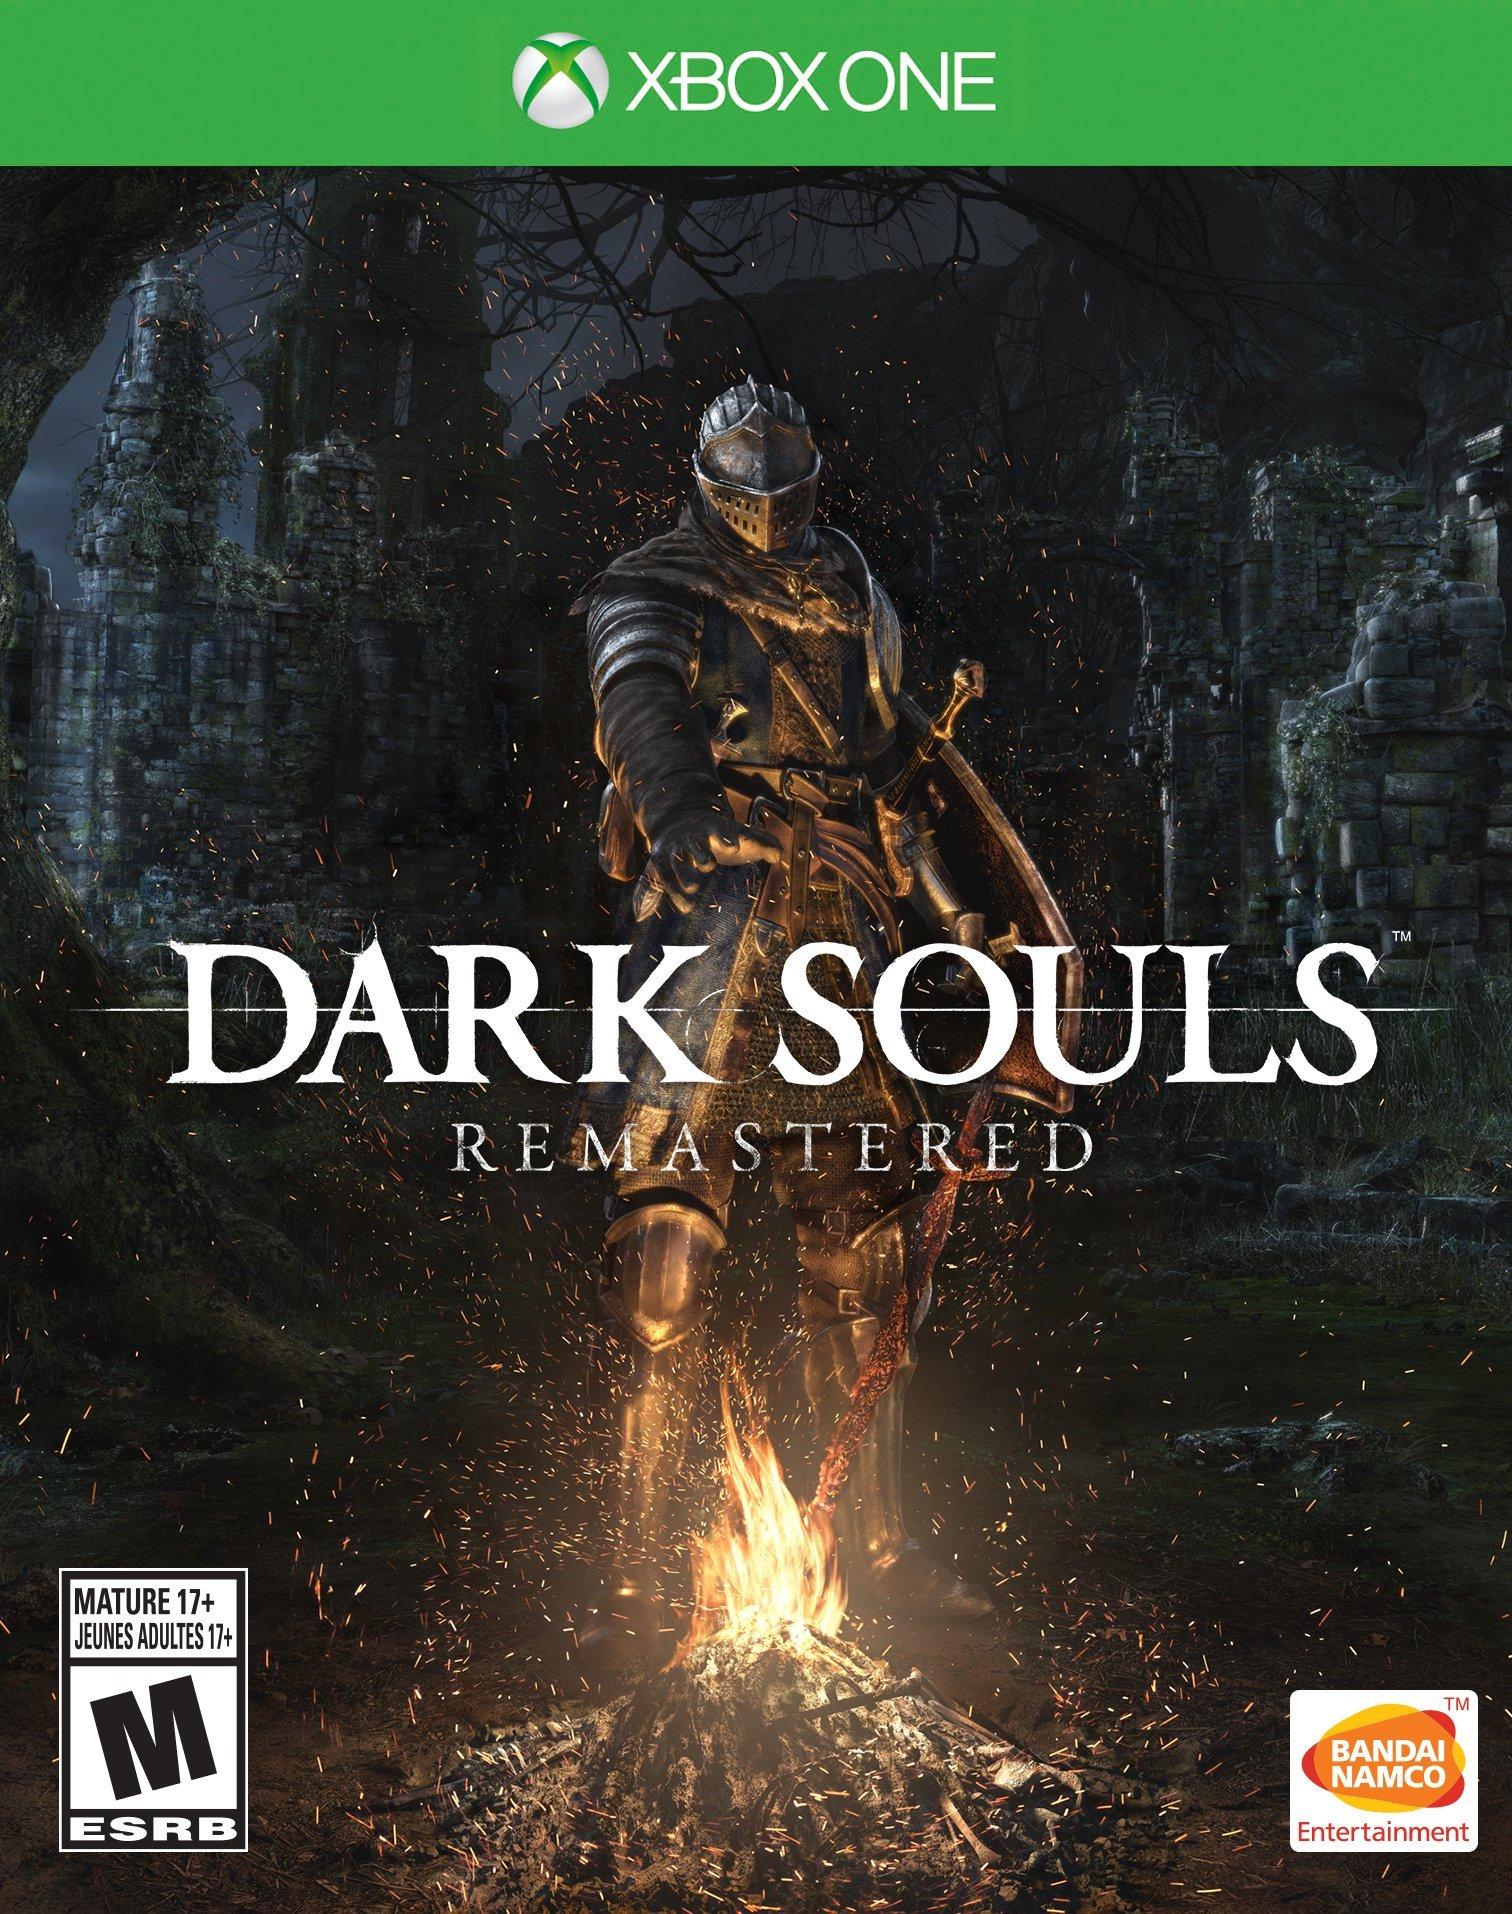 Dark Souls Trilogy - PlayStation 4, PlayStation 4